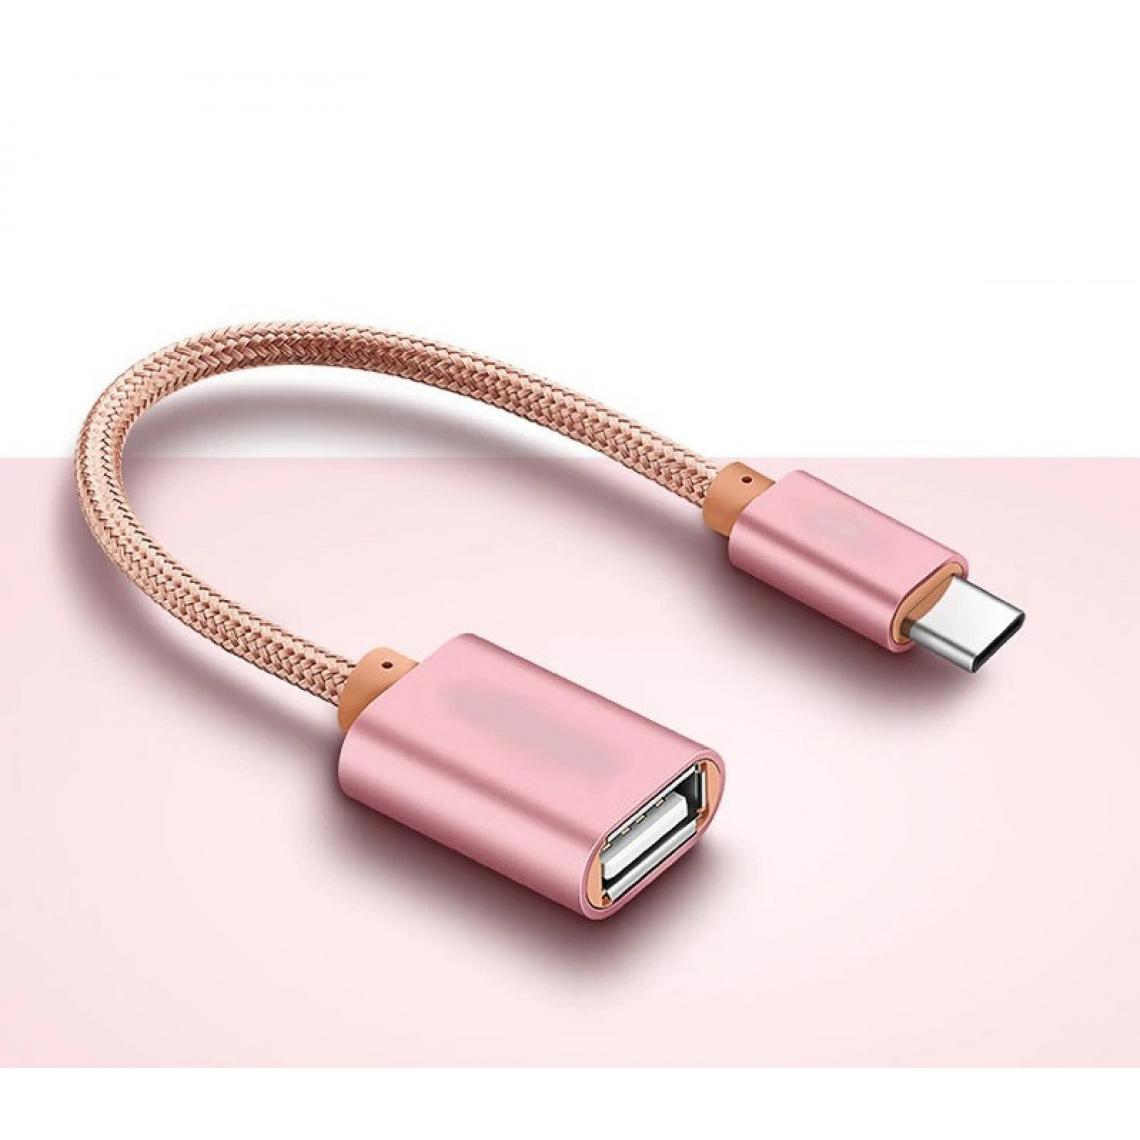 Shot - Adaptateur Type C/USB pour "SAMSUNG Galaxy A41" Smartphone & MAC USB-C Clef (ROSE) - Autres accessoires smartphone